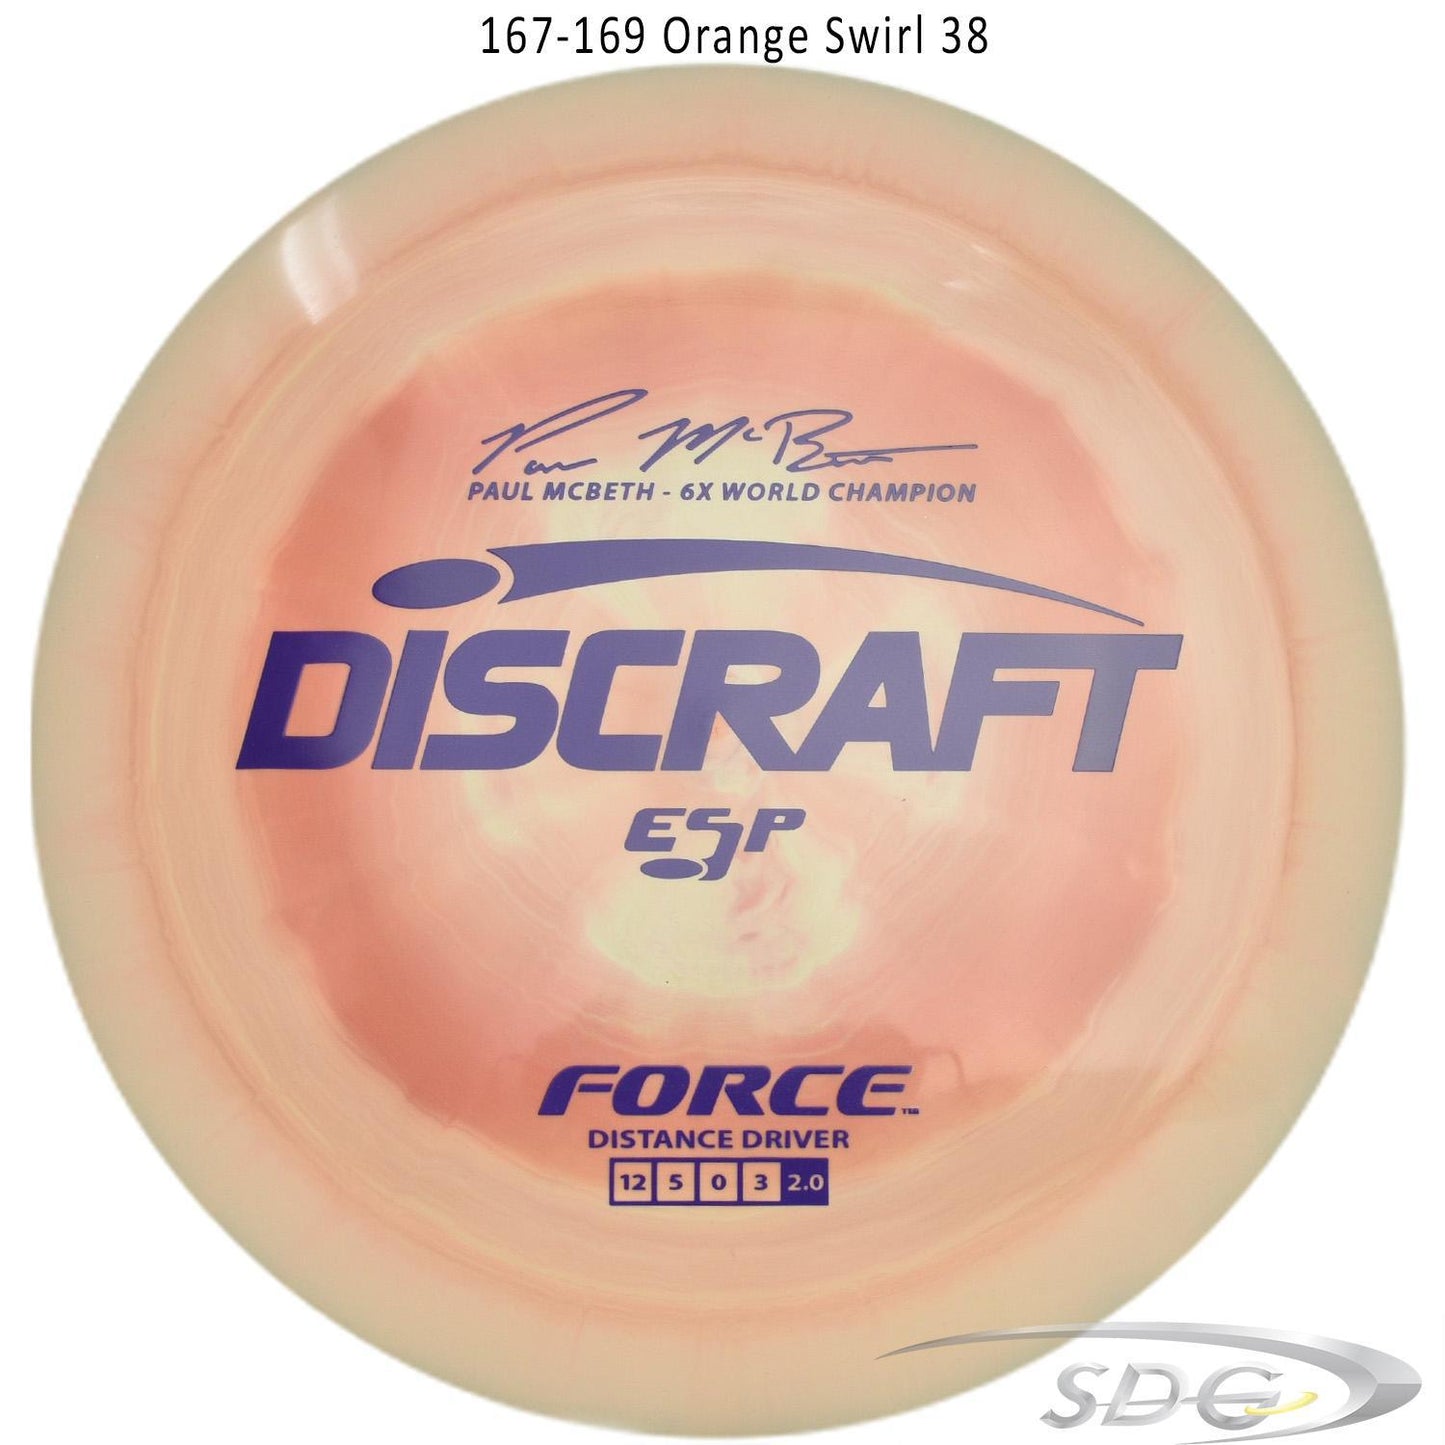 discraft-esp-force-6x-paul-mcbeth-signature-disc-golf-distance-driver 167-169 Orange Swirl 38